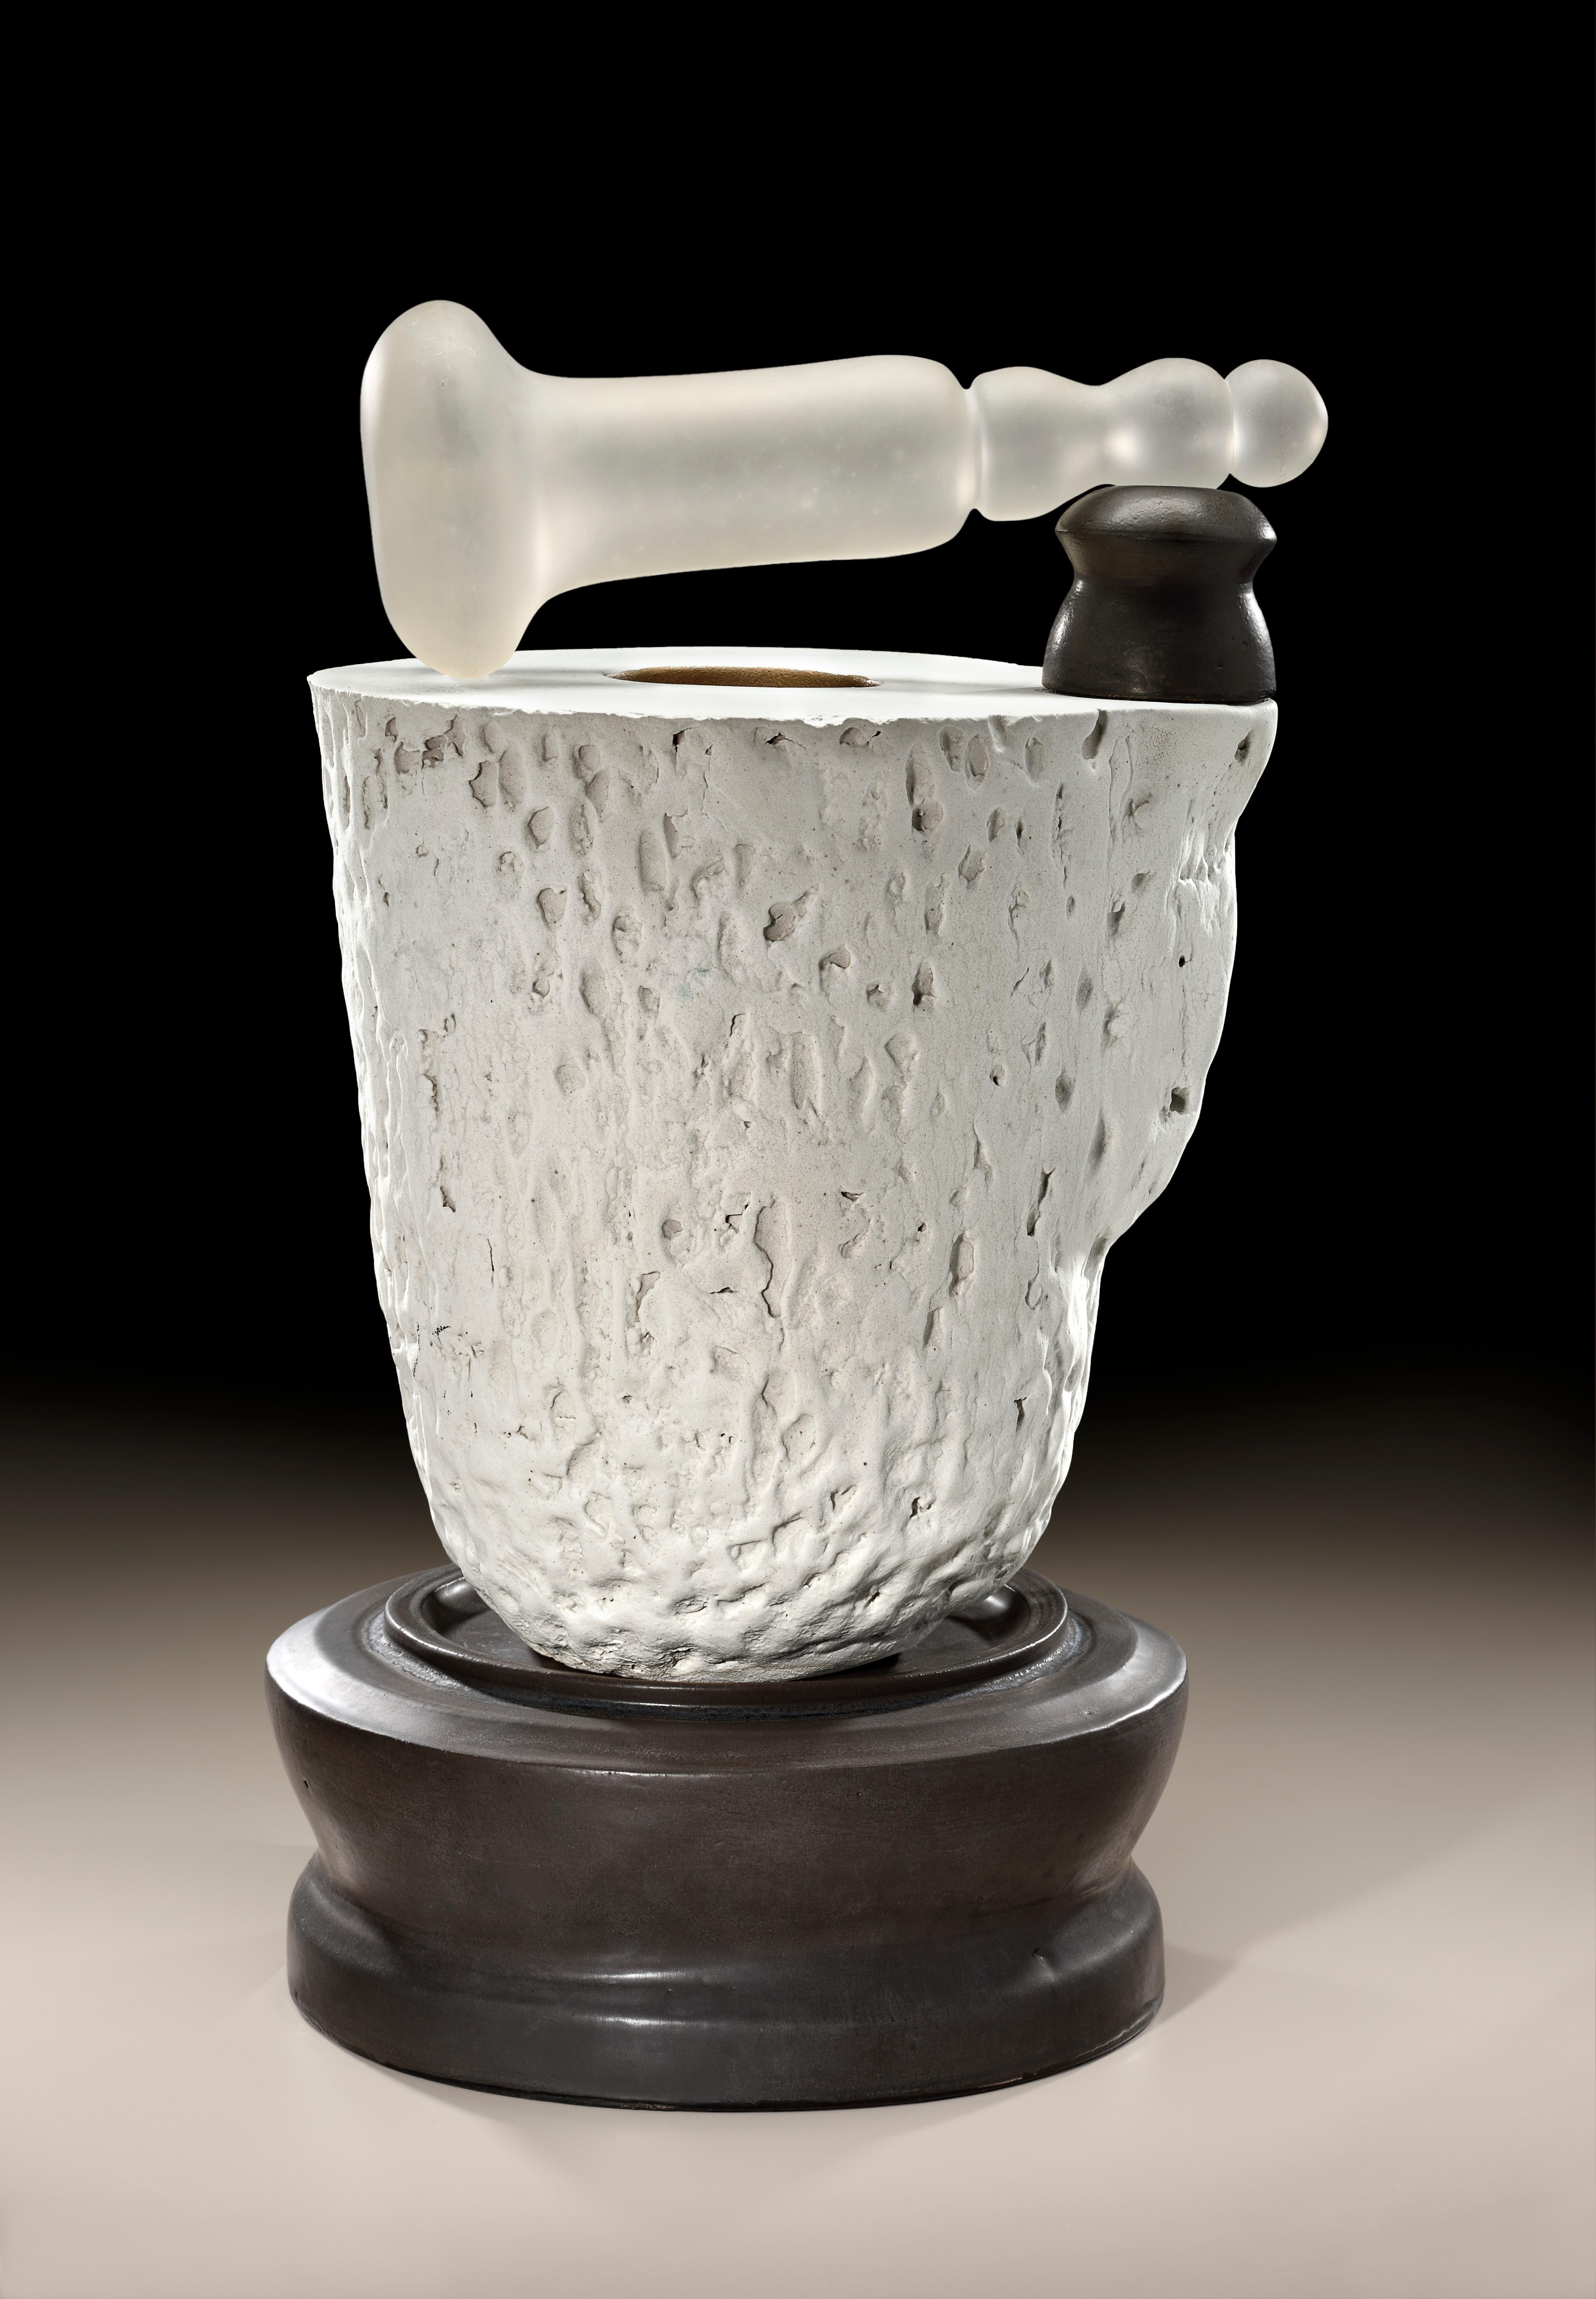 Contemporary Richard Hirsch Ceramic Mortar and Glass Pestle Sculpture #4, 2020 For Sale